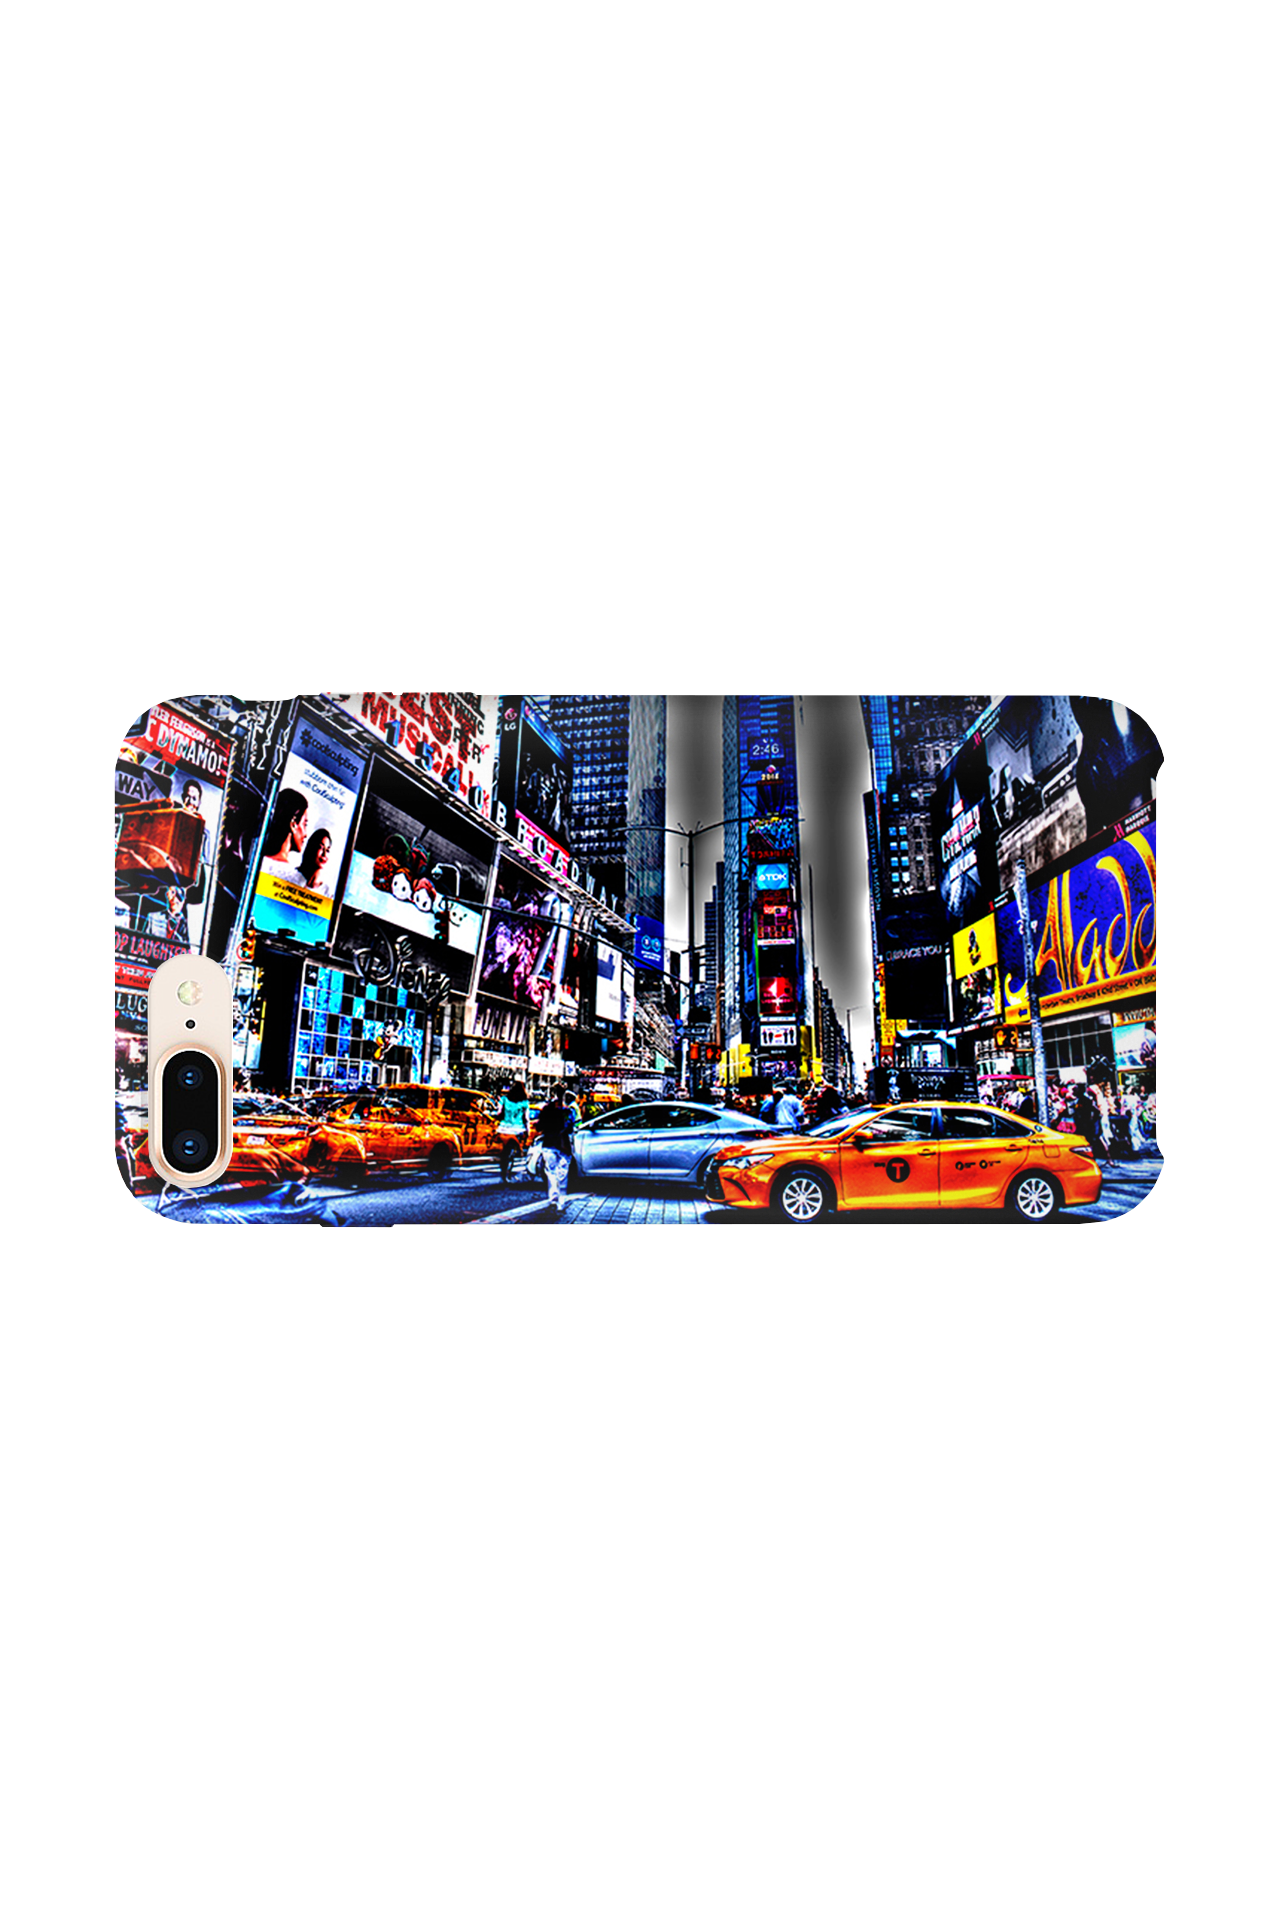 Times Square cab iPhone case